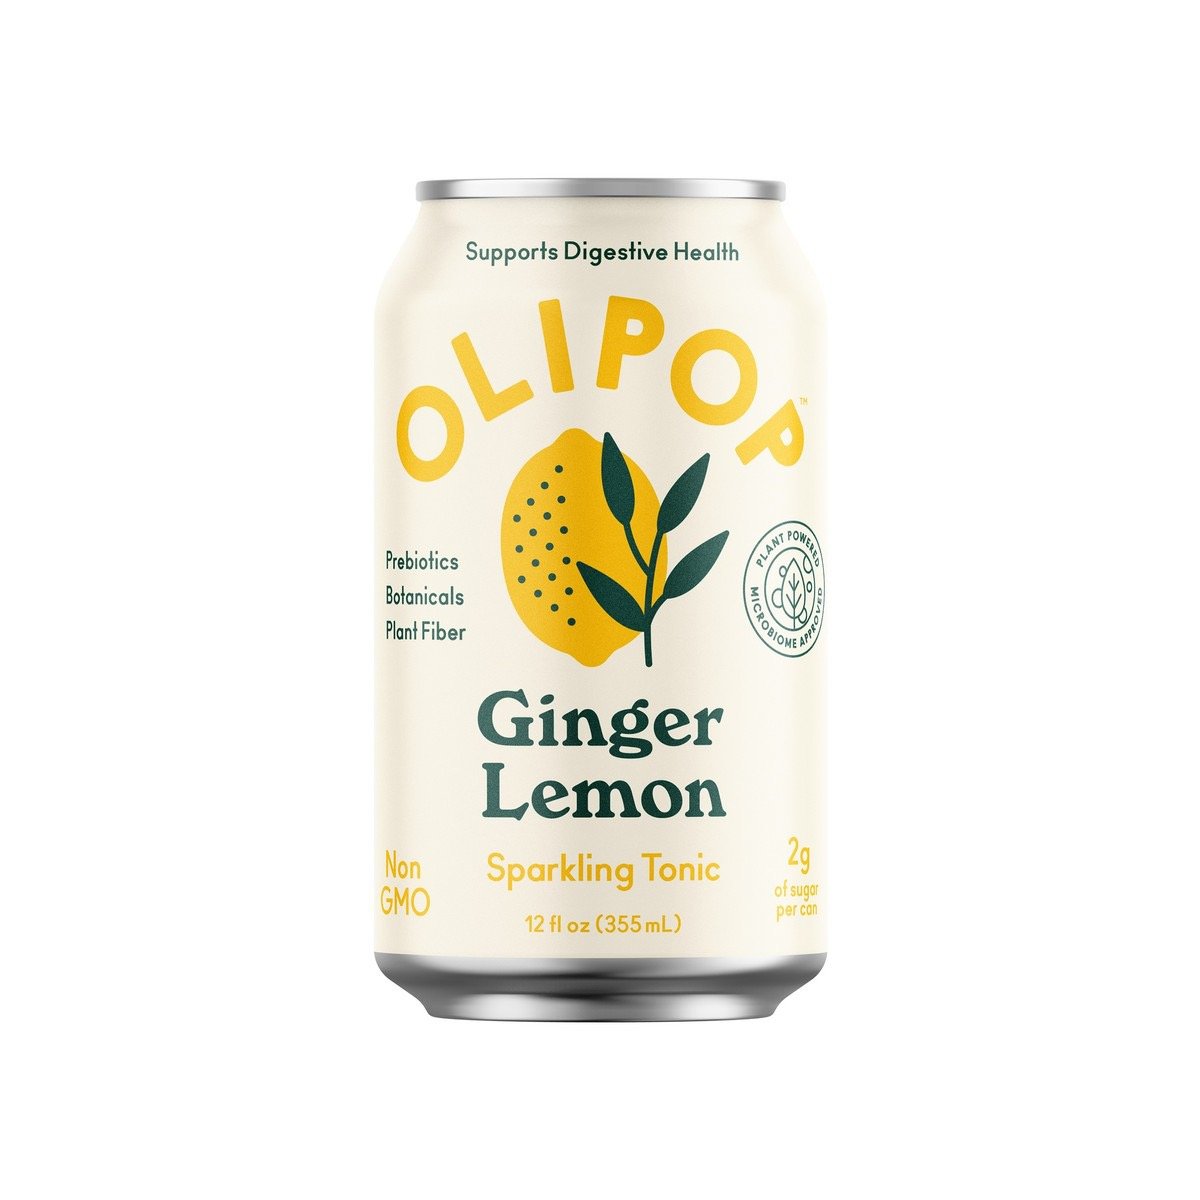 Ginger sparkling soda